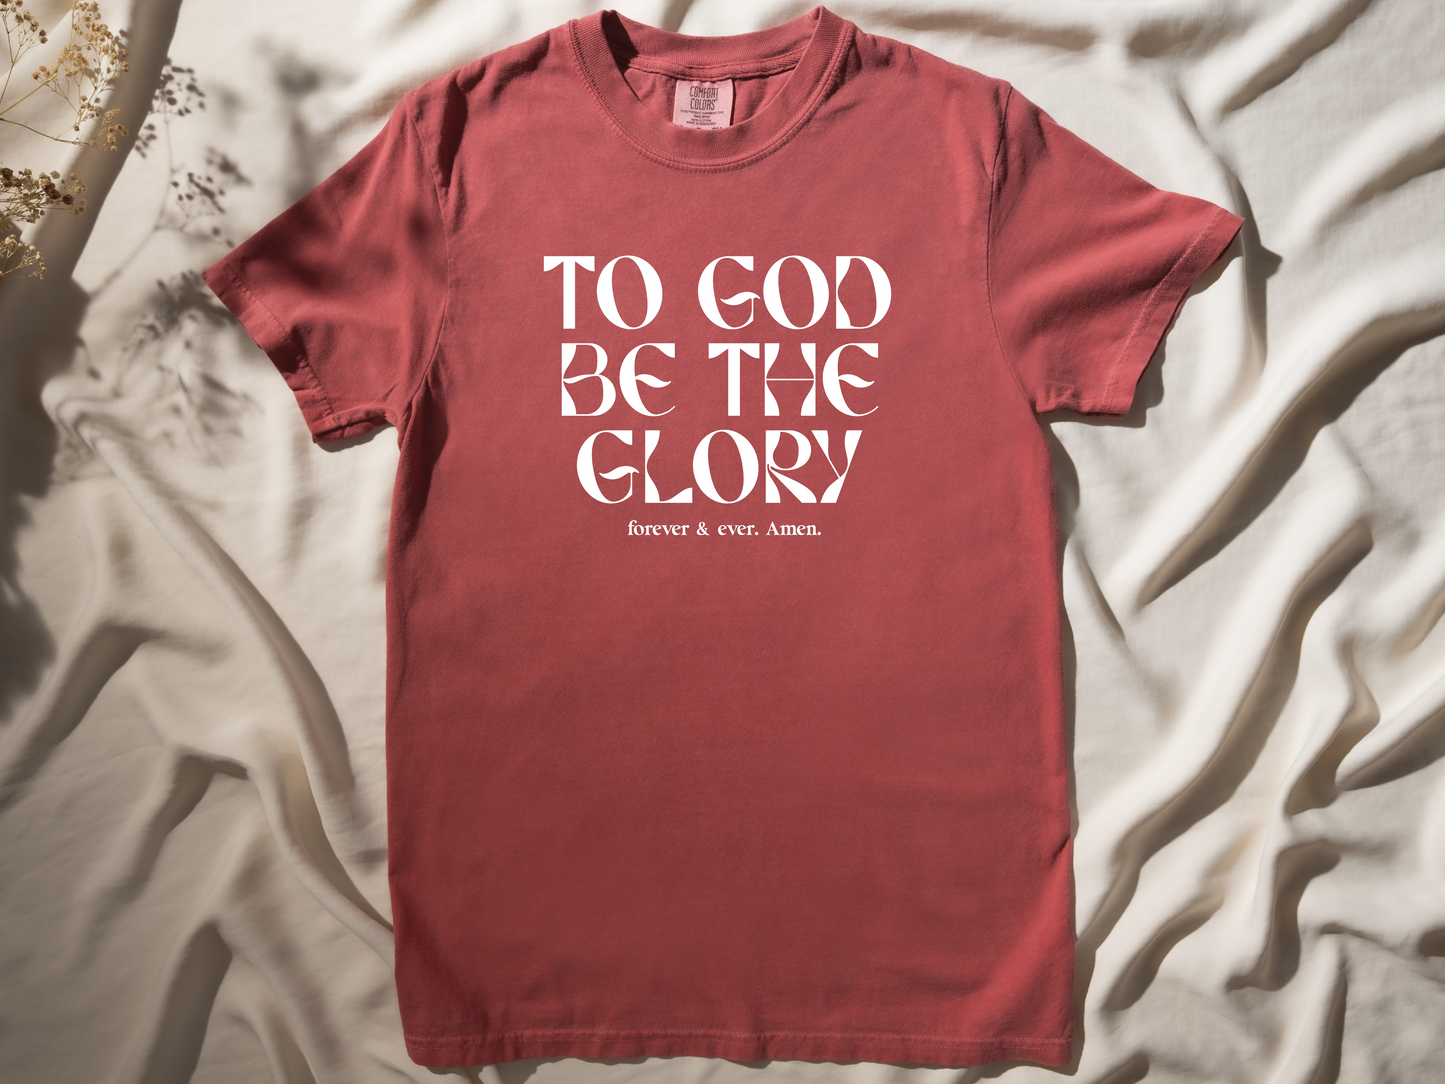 To God be the glory T-shirt- Crimson/Hemp